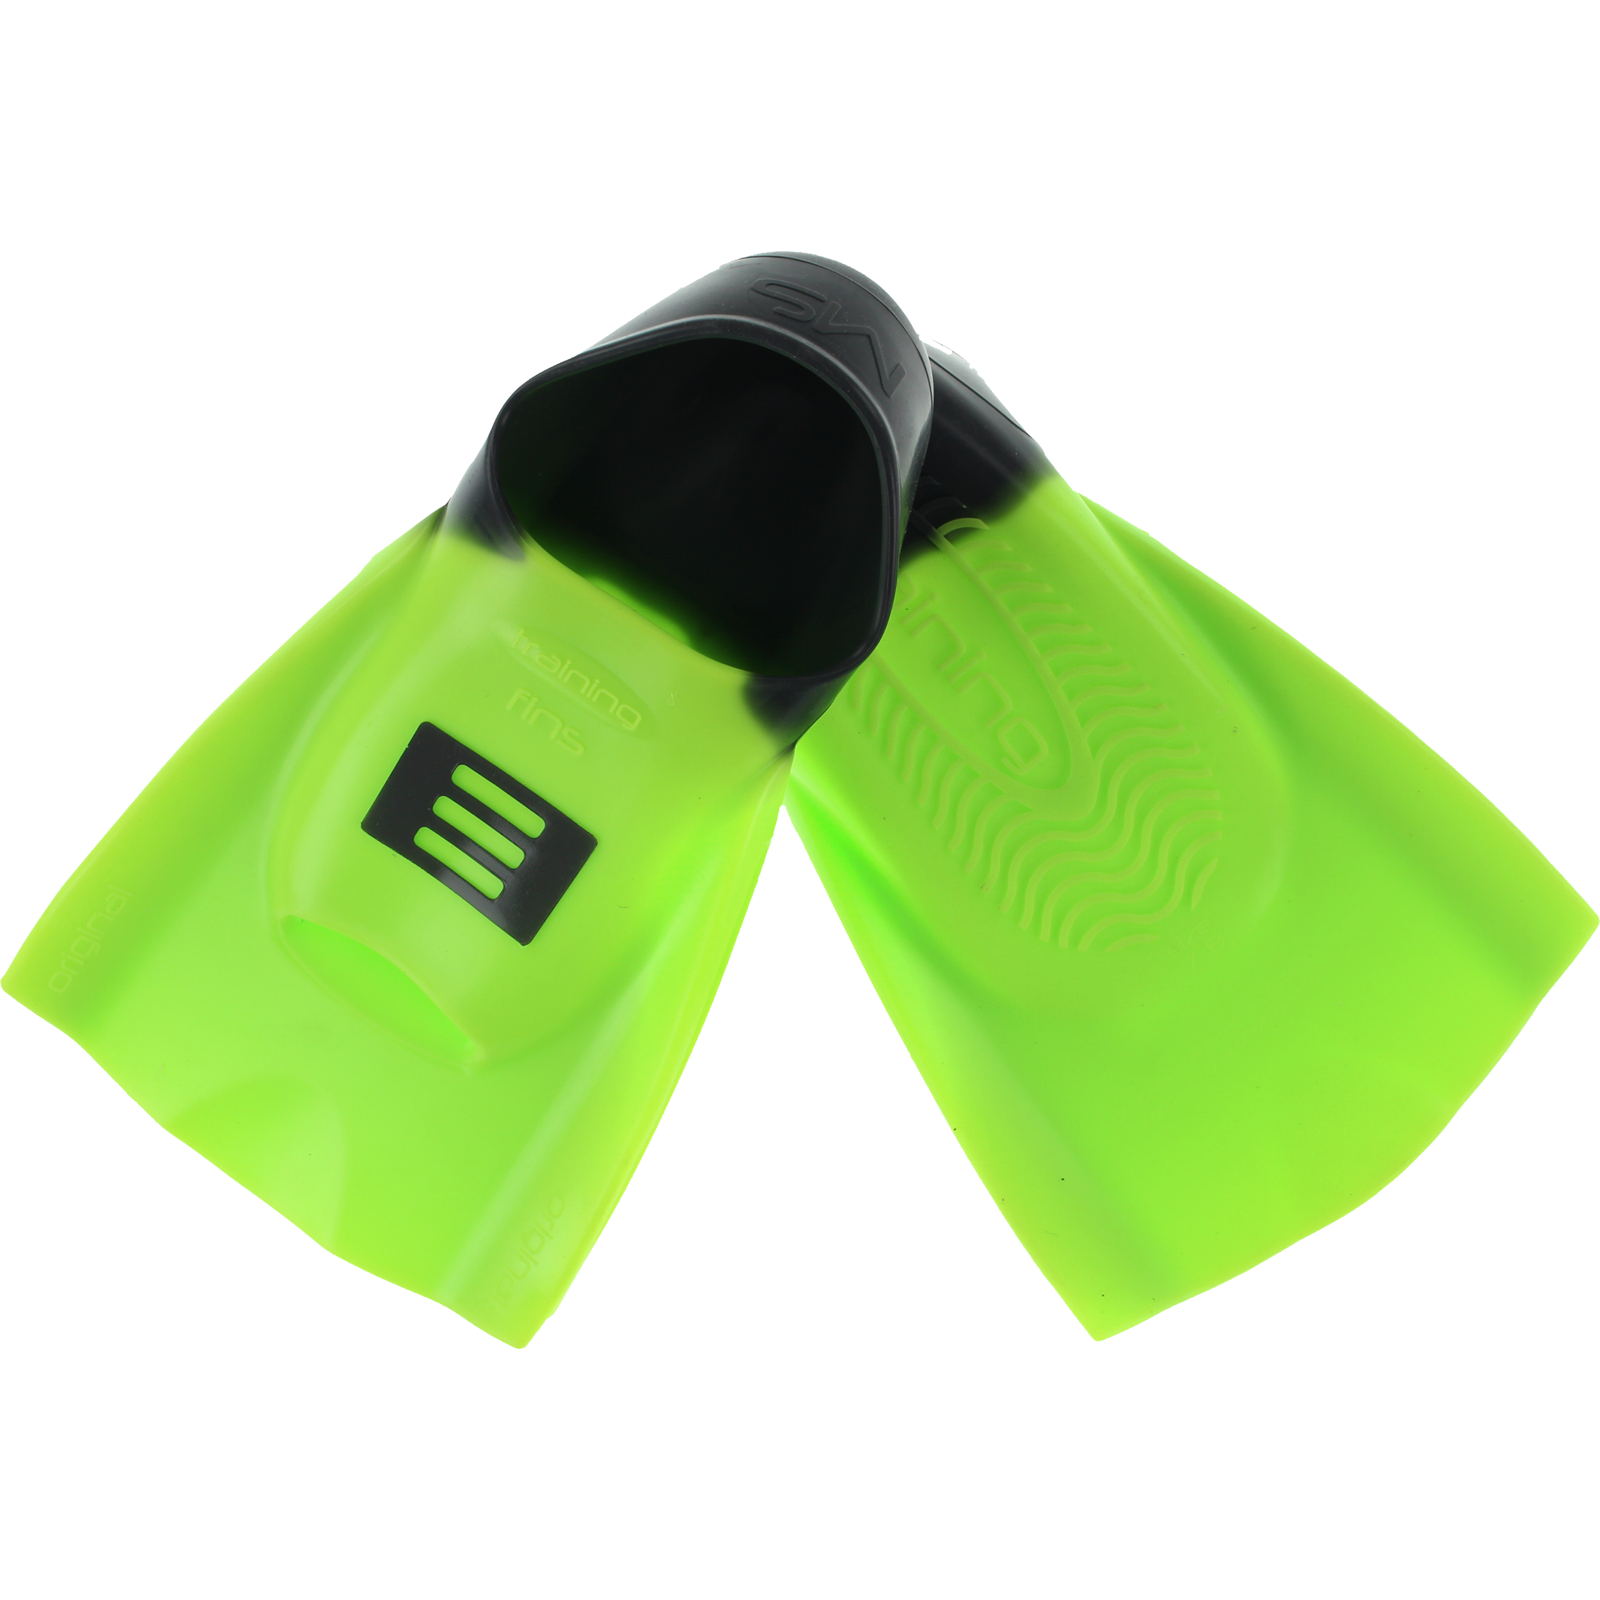 DMC Training Swim Fins - SMALL/MEDIUM Green/Charcoal (Size 7-8)